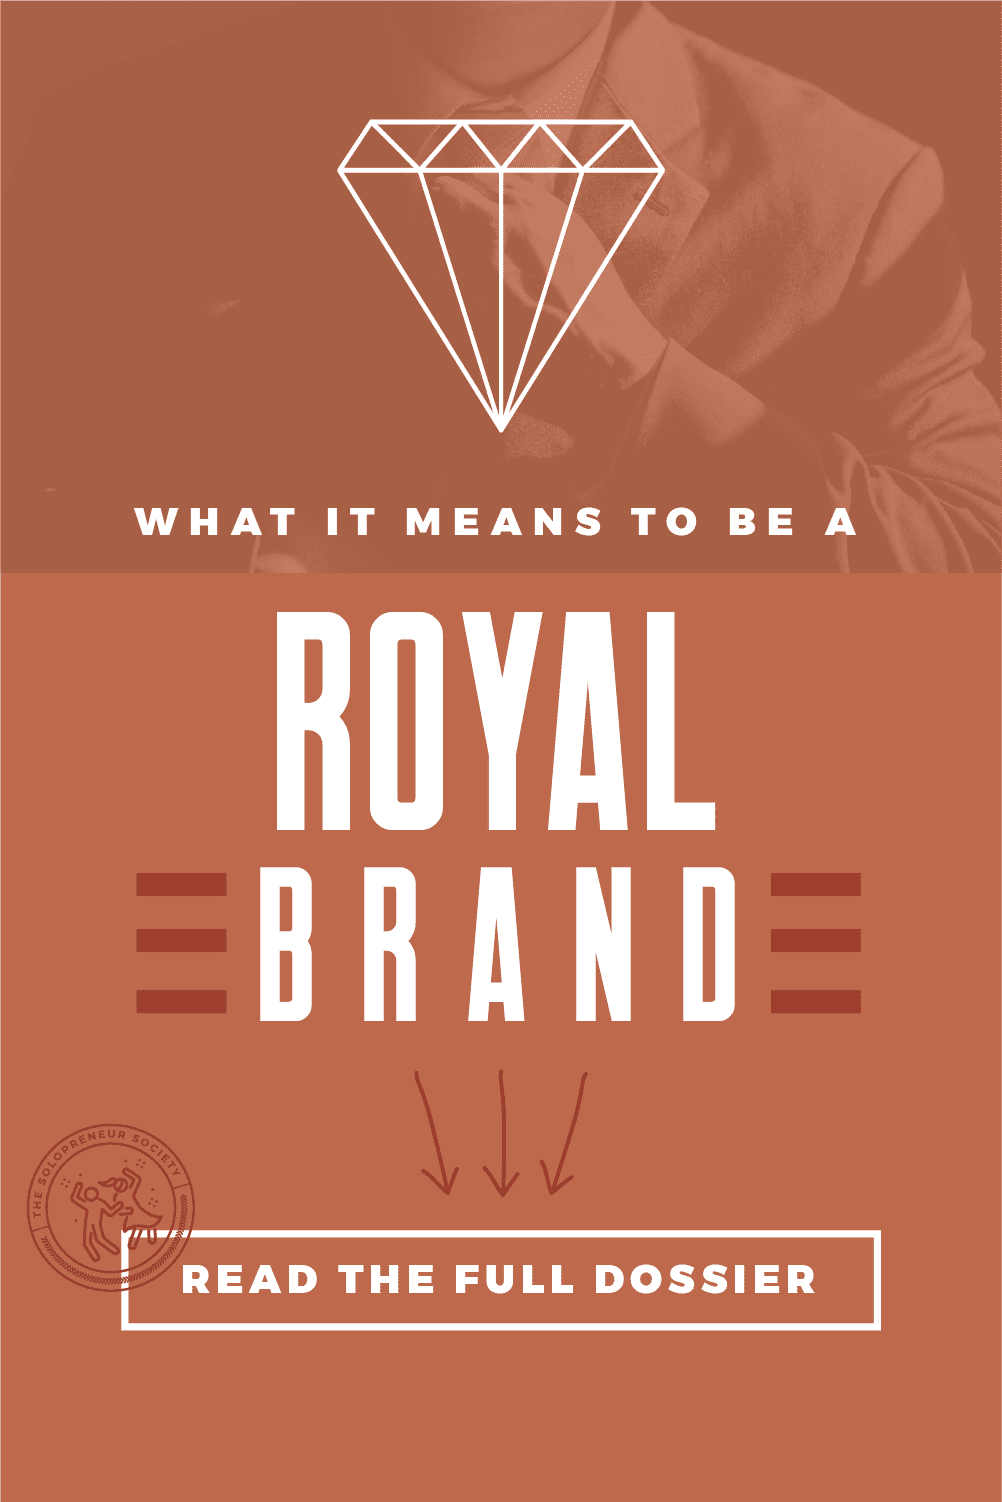 Royal Brand Personality